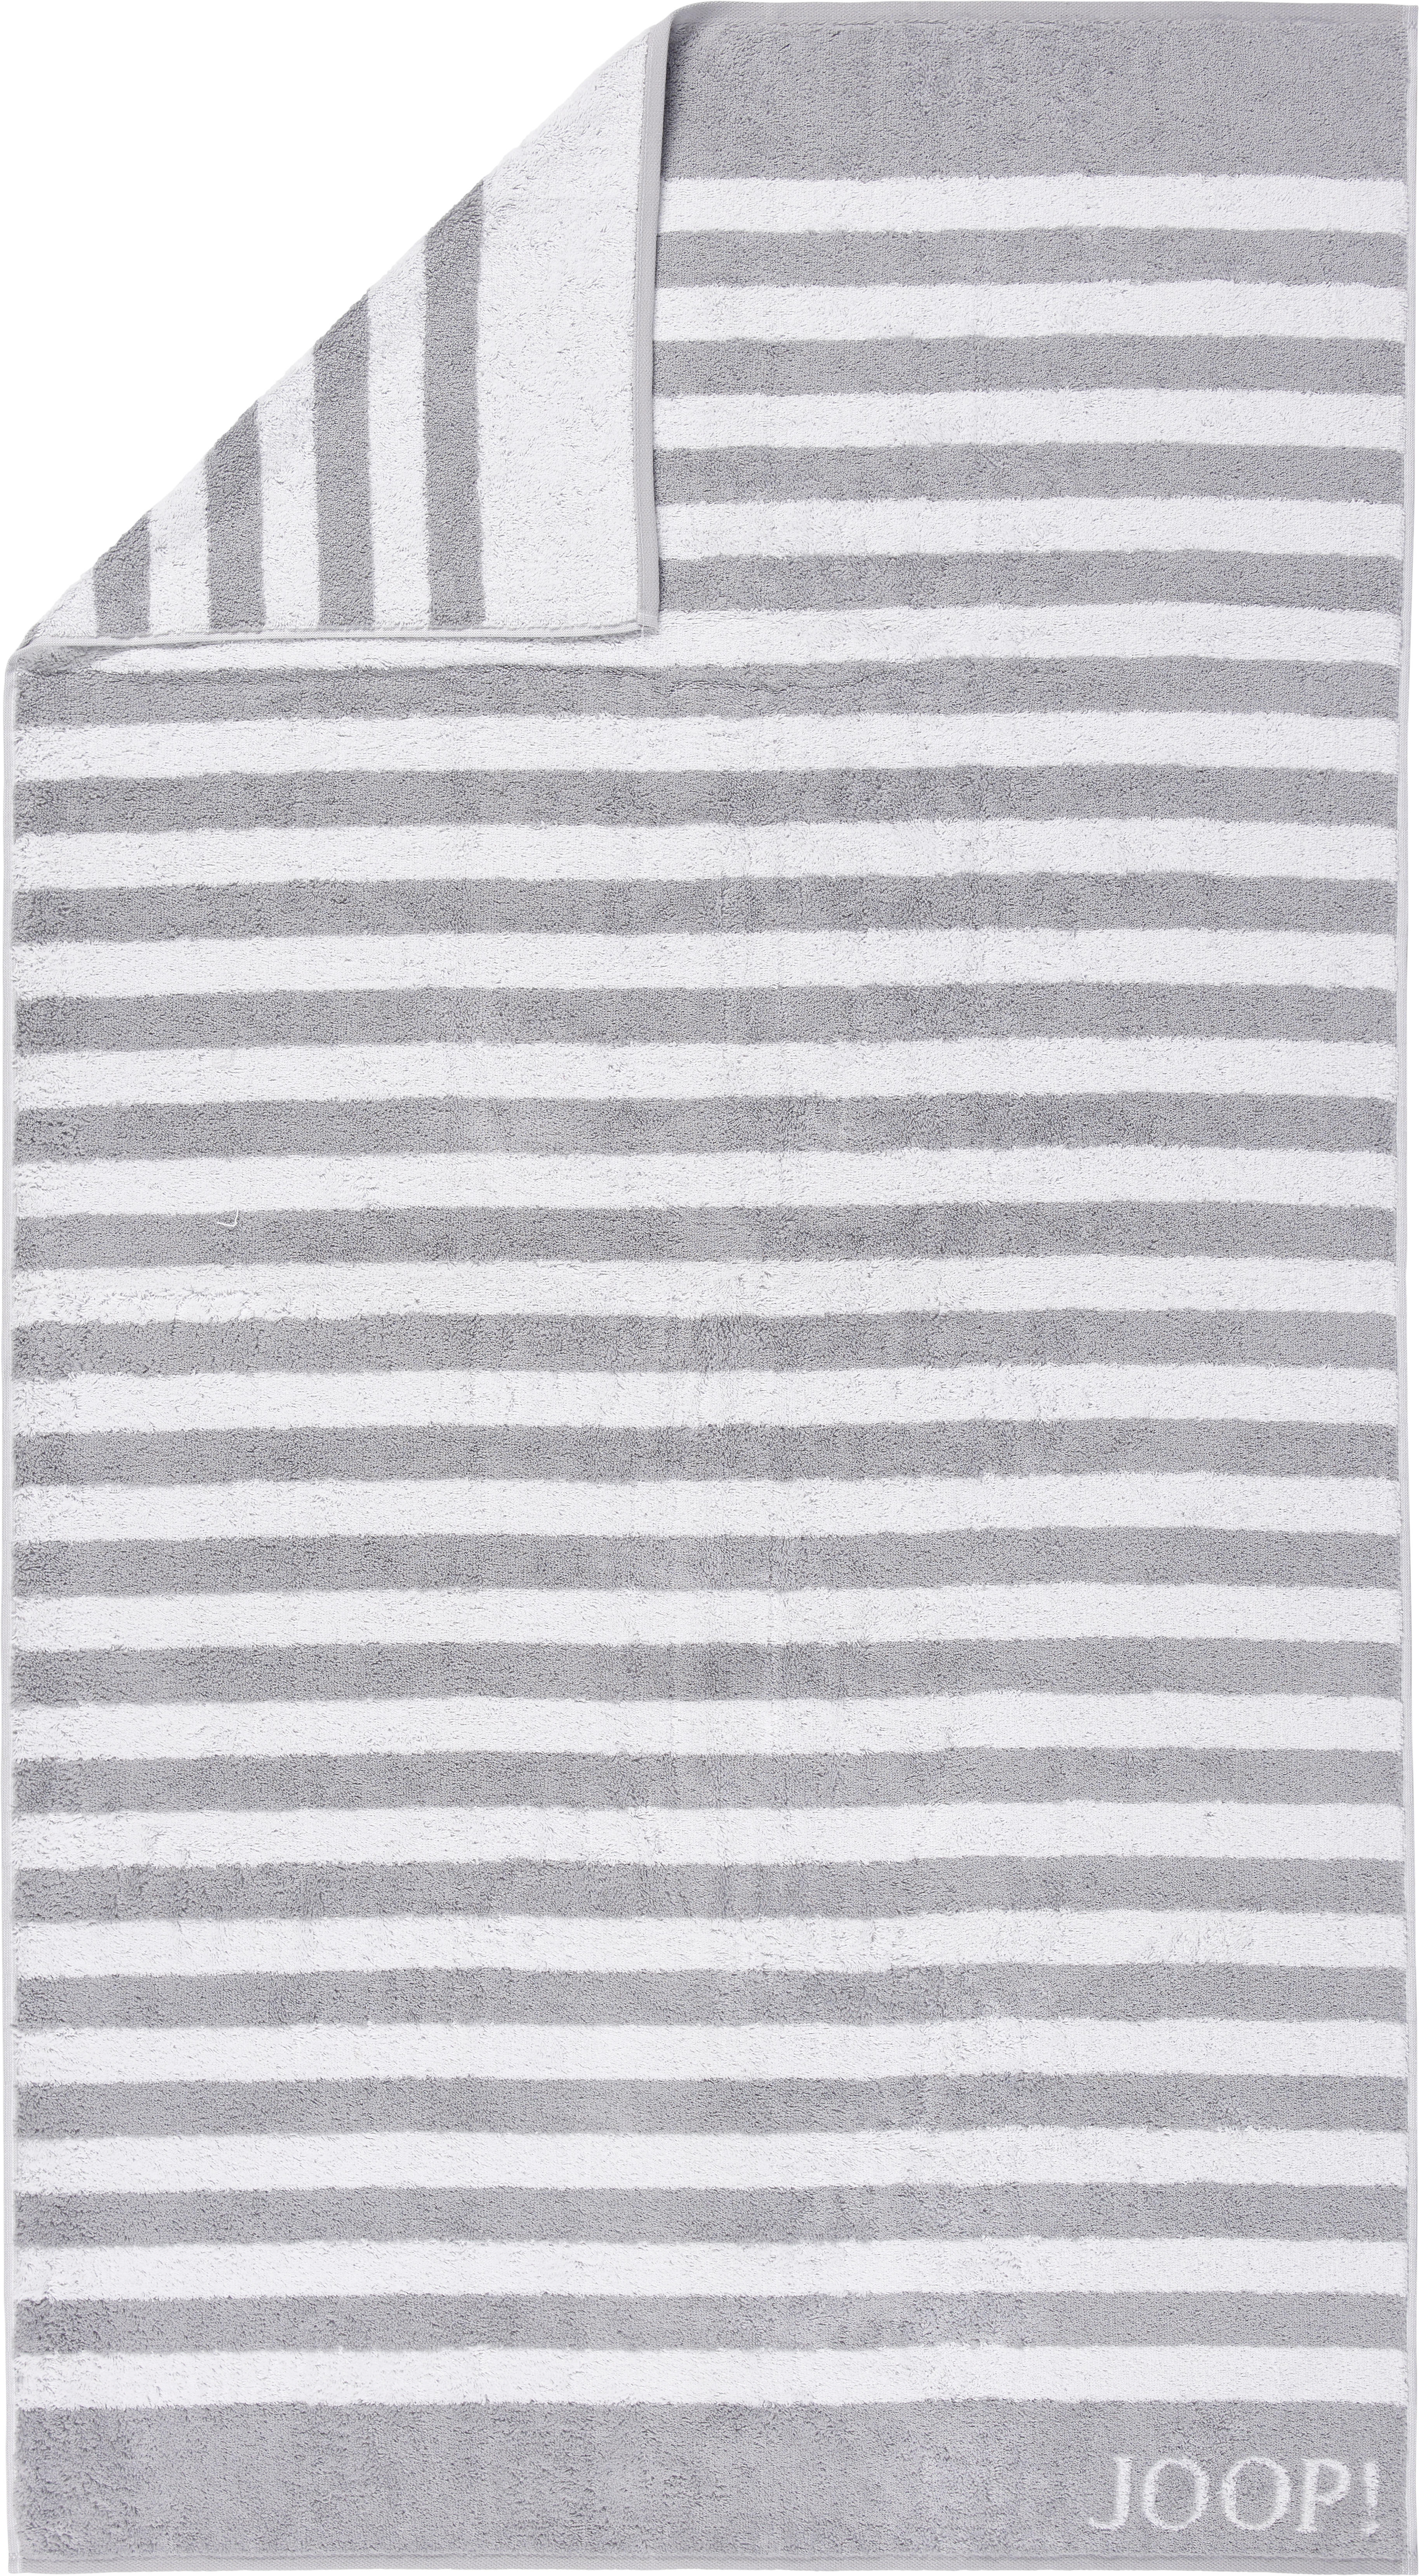 DUSCHTUCH Classic Stripes 80/150 cm  - Silberfarben/Hellgrau, Basics, Textil (80/150cm) - Joop!